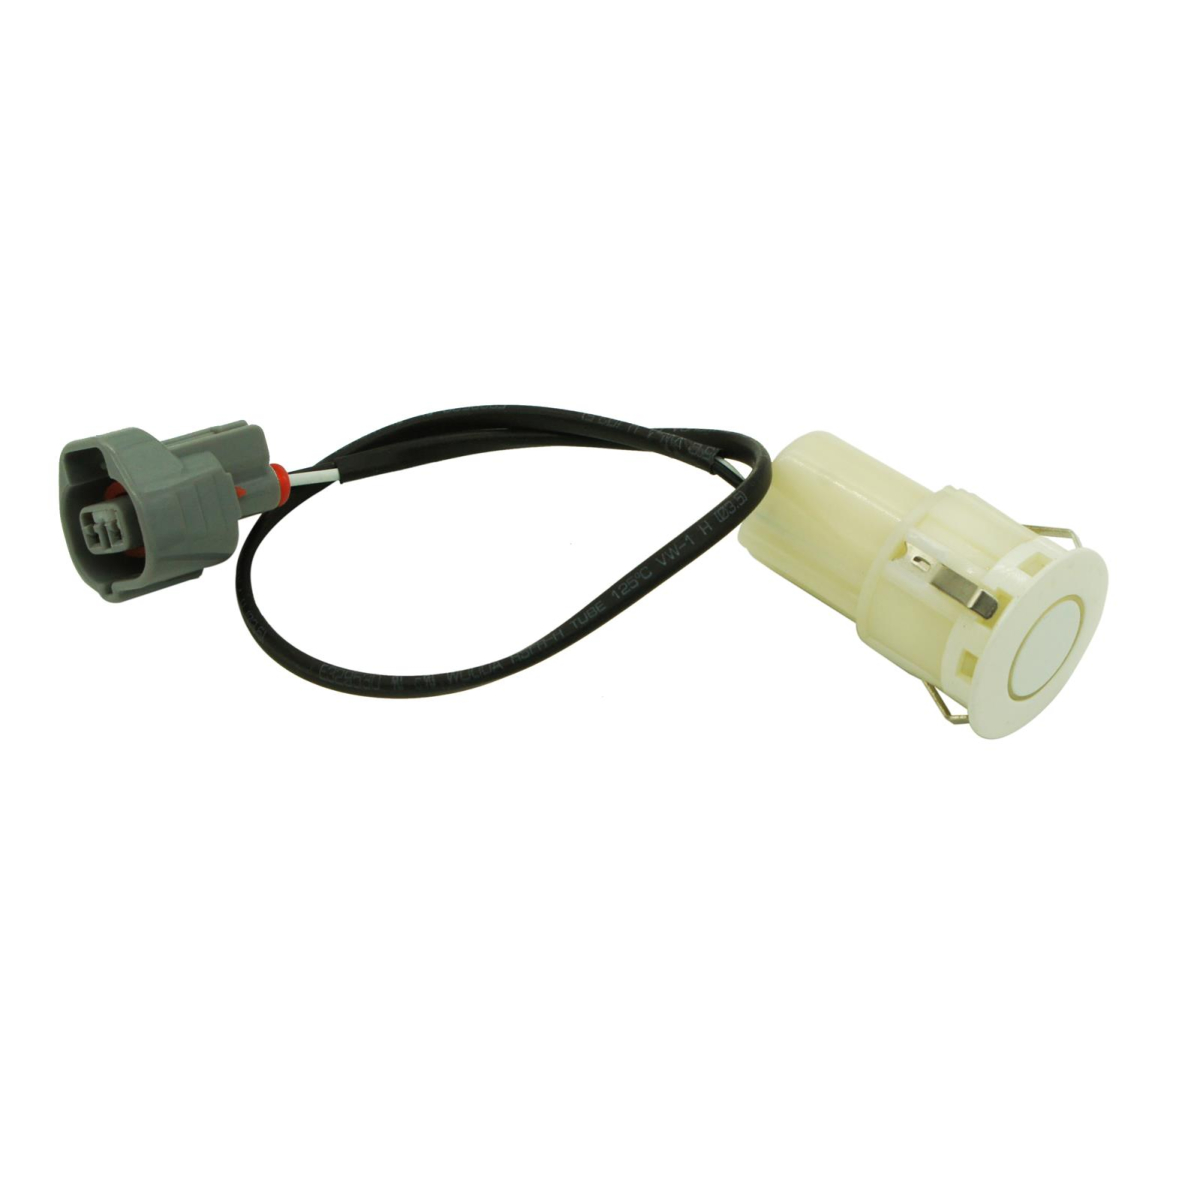 Park sensor 89341-YY040 for Toyota PDC Parktronic